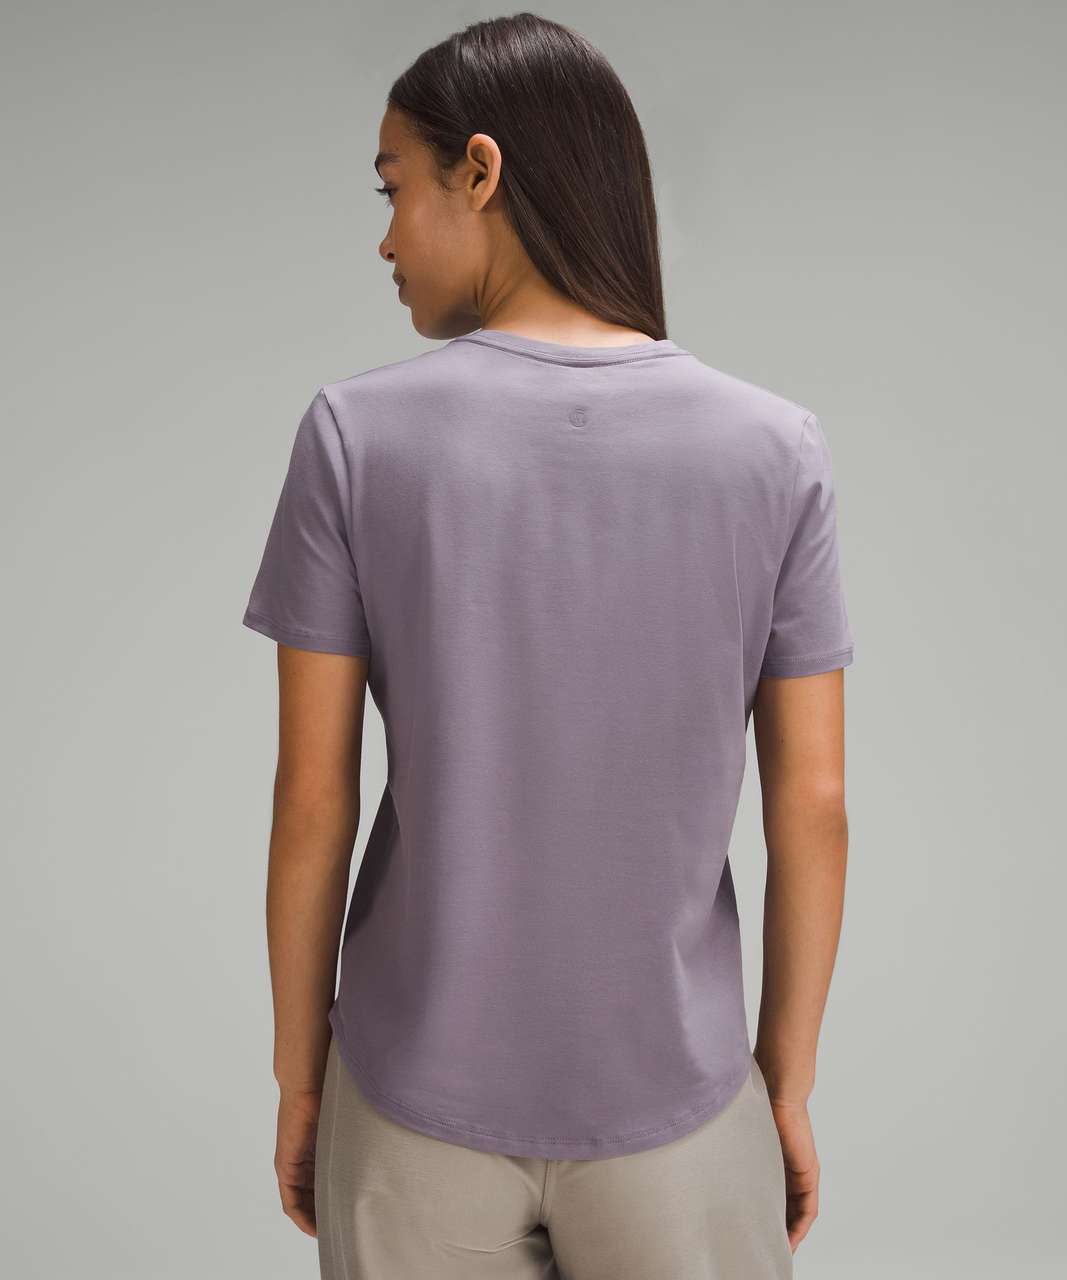 Lululemon Love Crewneck T-Shirt - Dusky Lavender